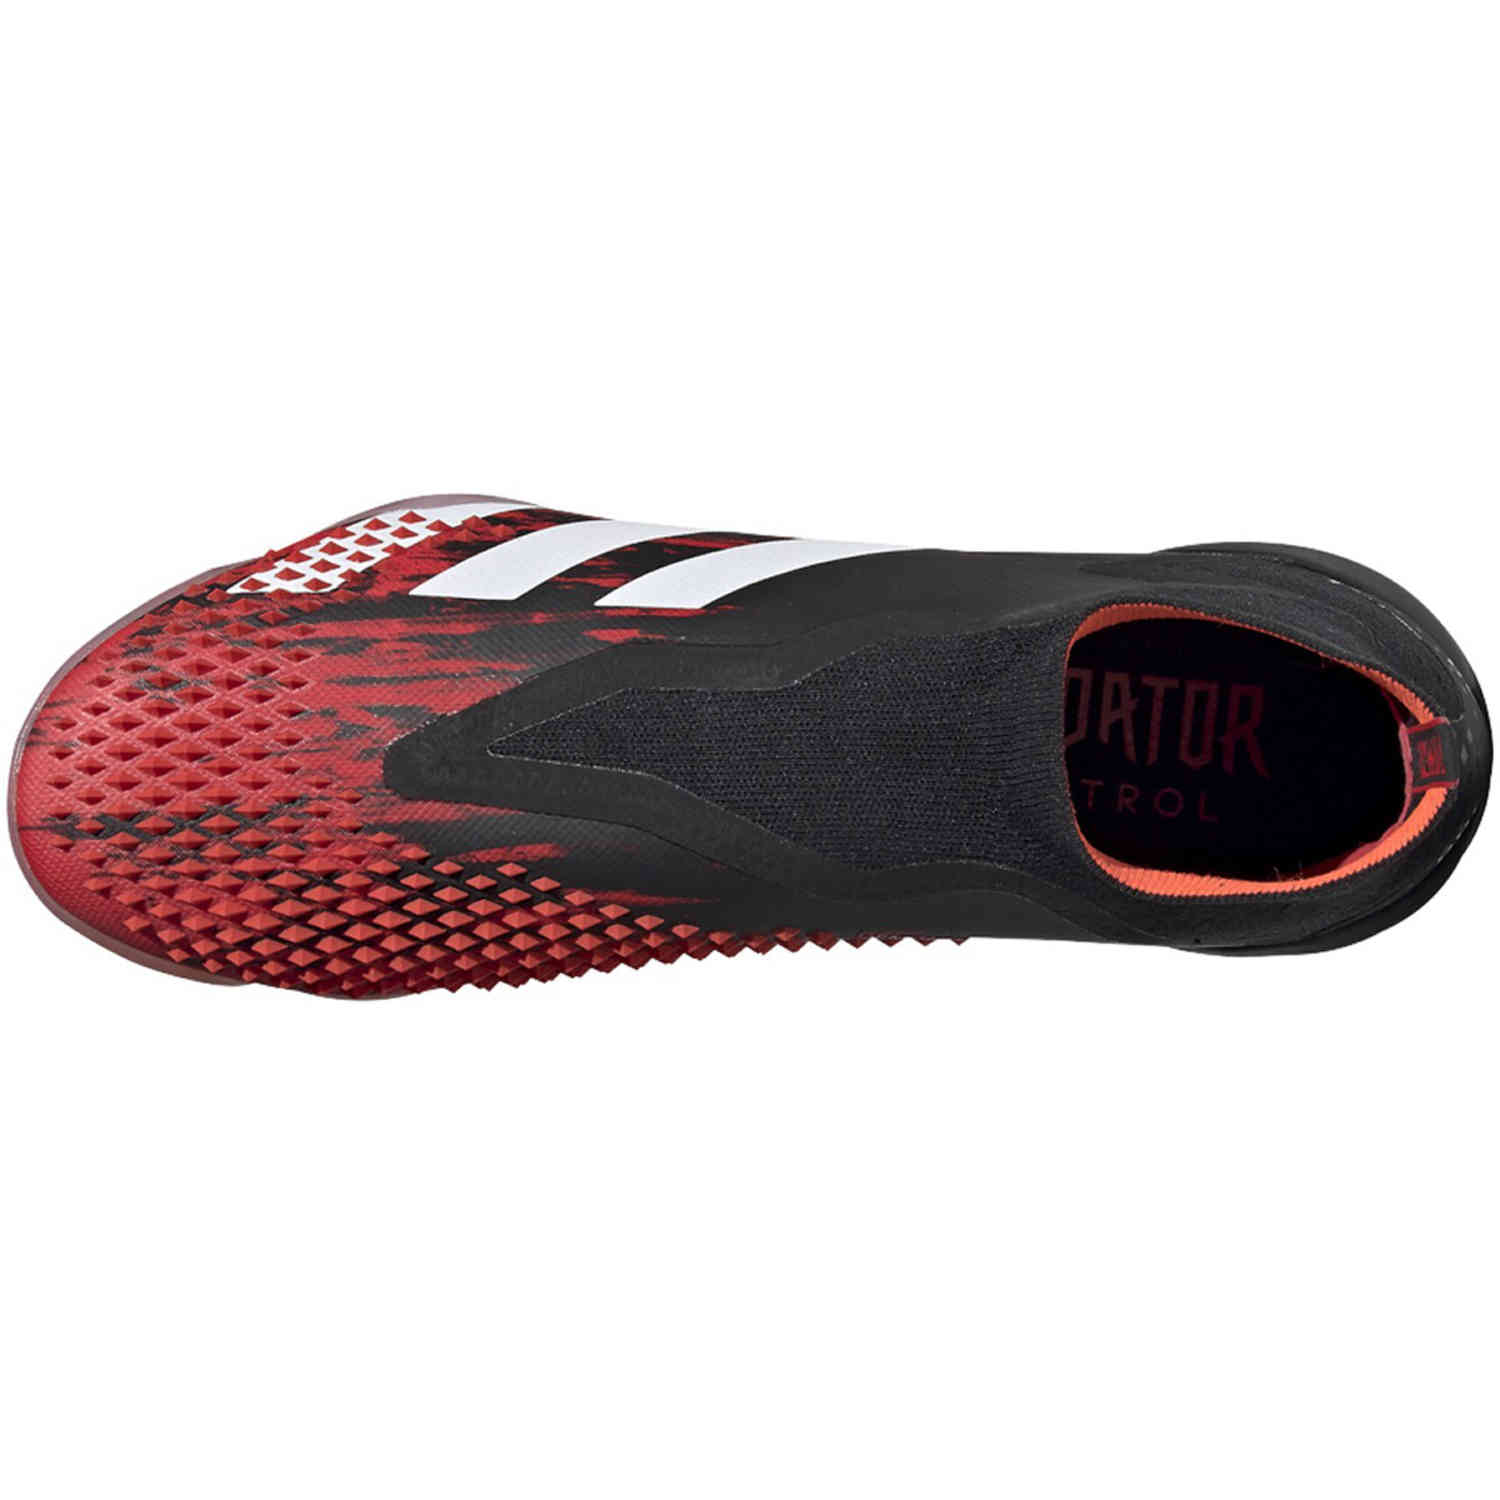 Jual Sepatu Futsal Pria Adidas Predator 20.3 Indoor Boots.